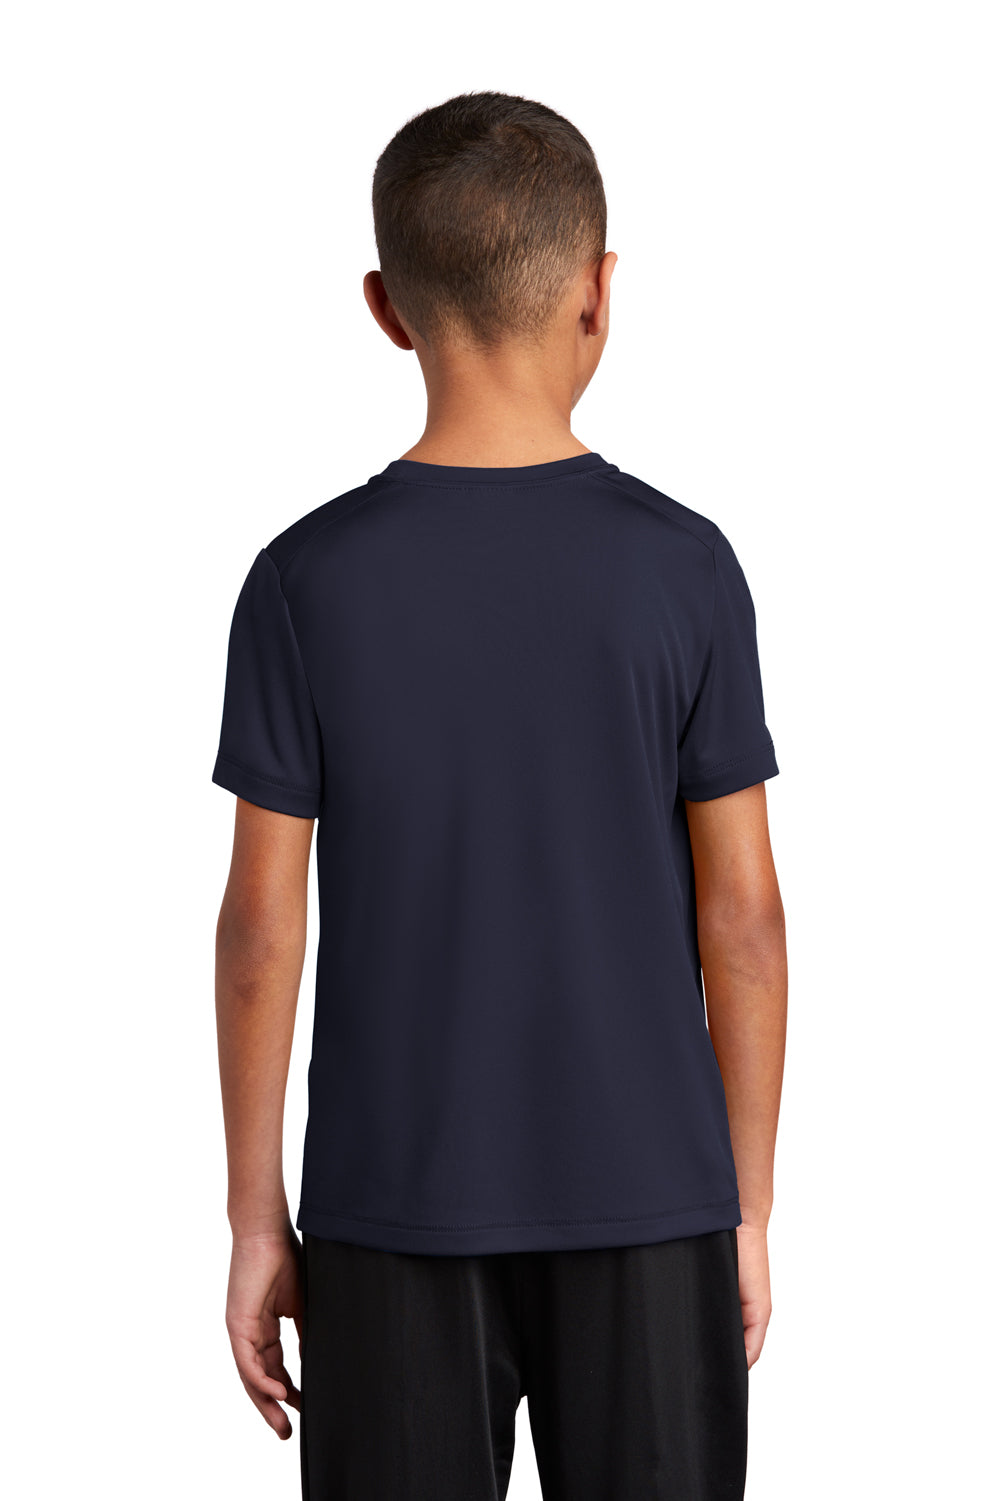 Sport-Tek Youth Short Sleeve Crewneck T-Shirt True Navy Blue Side